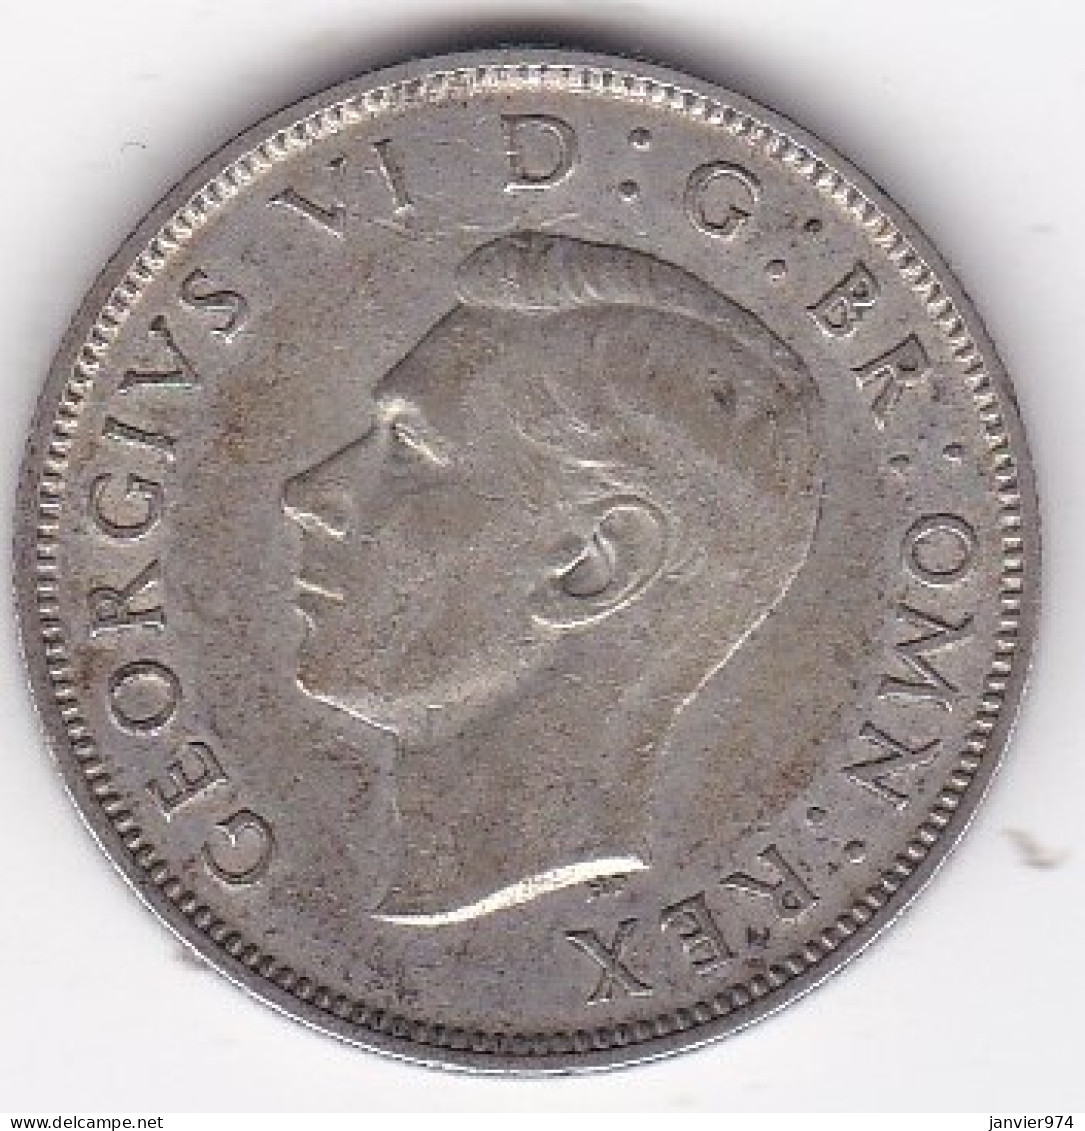 Grande Bretagne. Two Shillings 1942. George VI, En Argent, KM# 855 - J. 1 Florin / 2 Schillings